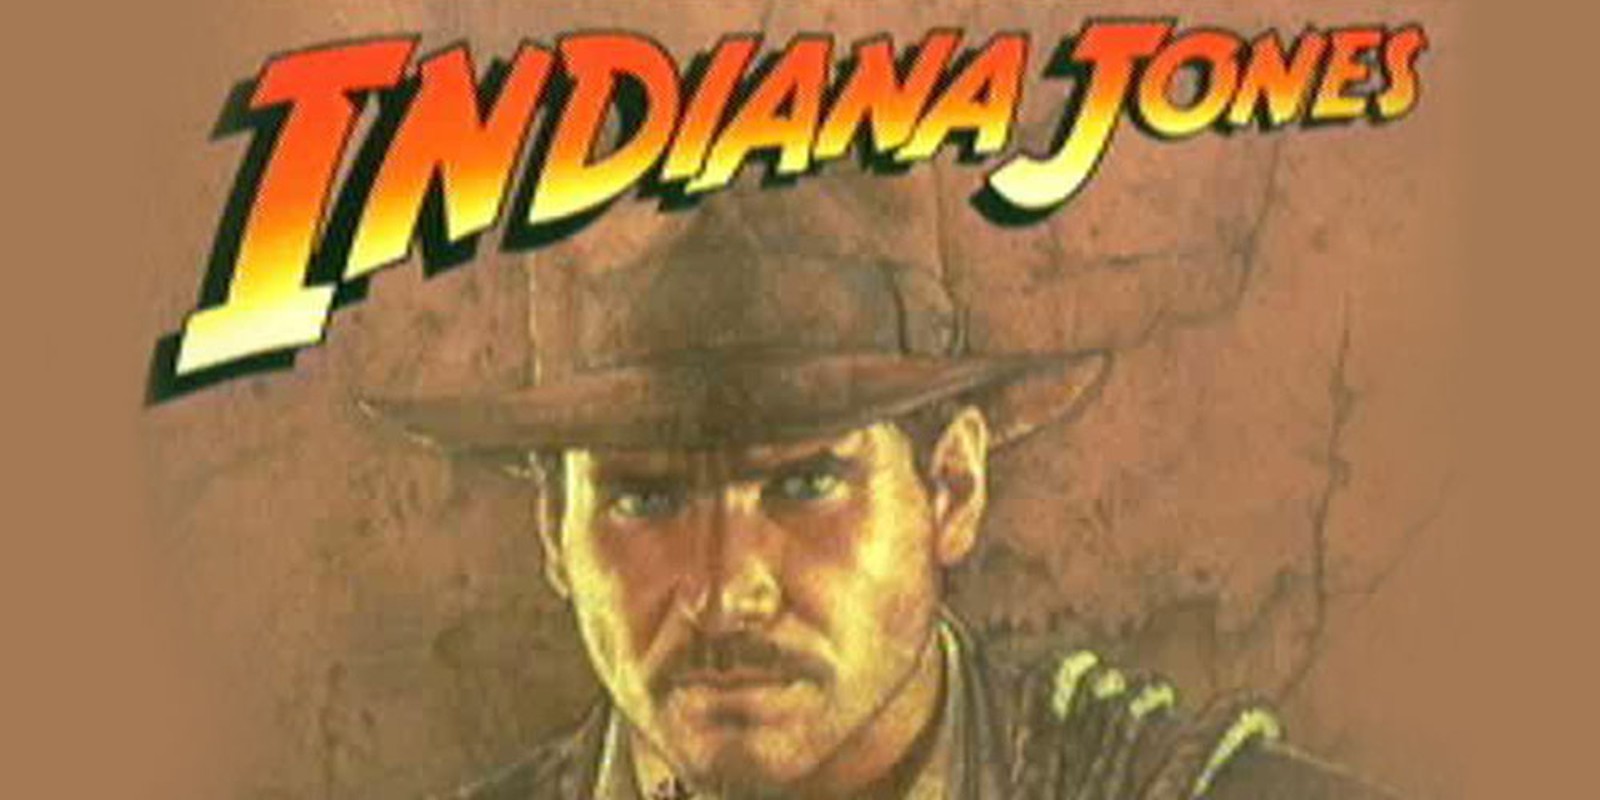 Indiana Jones®' Greatest Adventures™